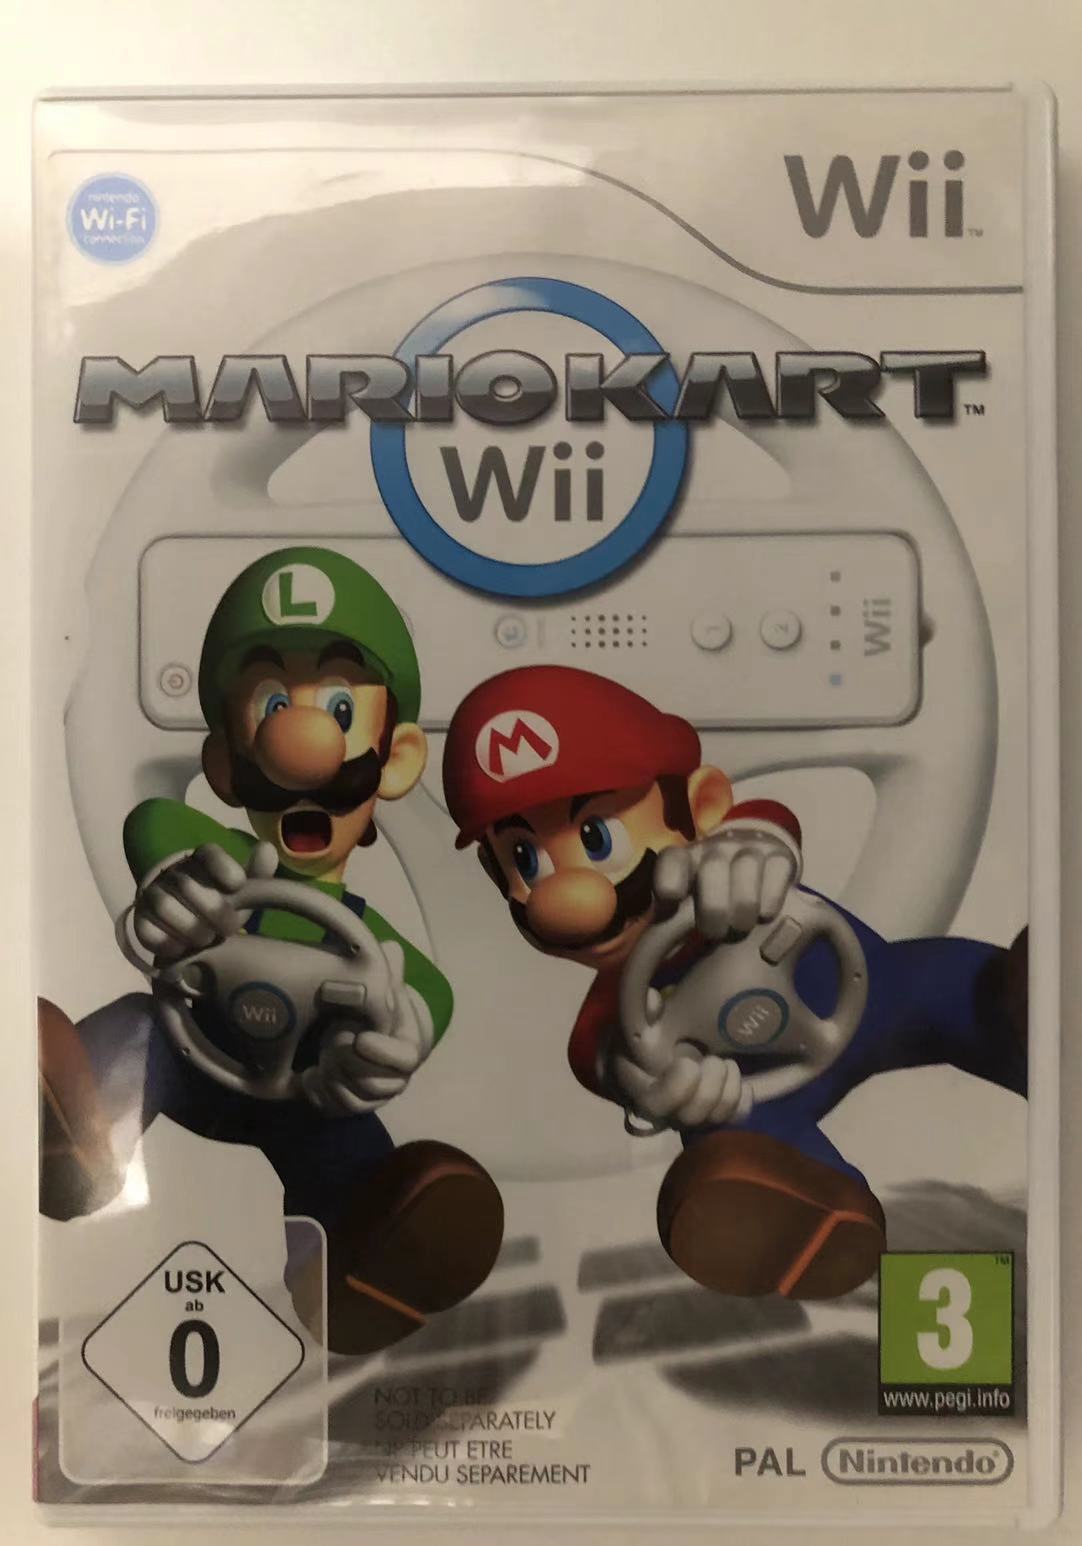 MARIO KART Wii『マリオカートWii』【中古・通常版・欧州版】 / kinjoinfo